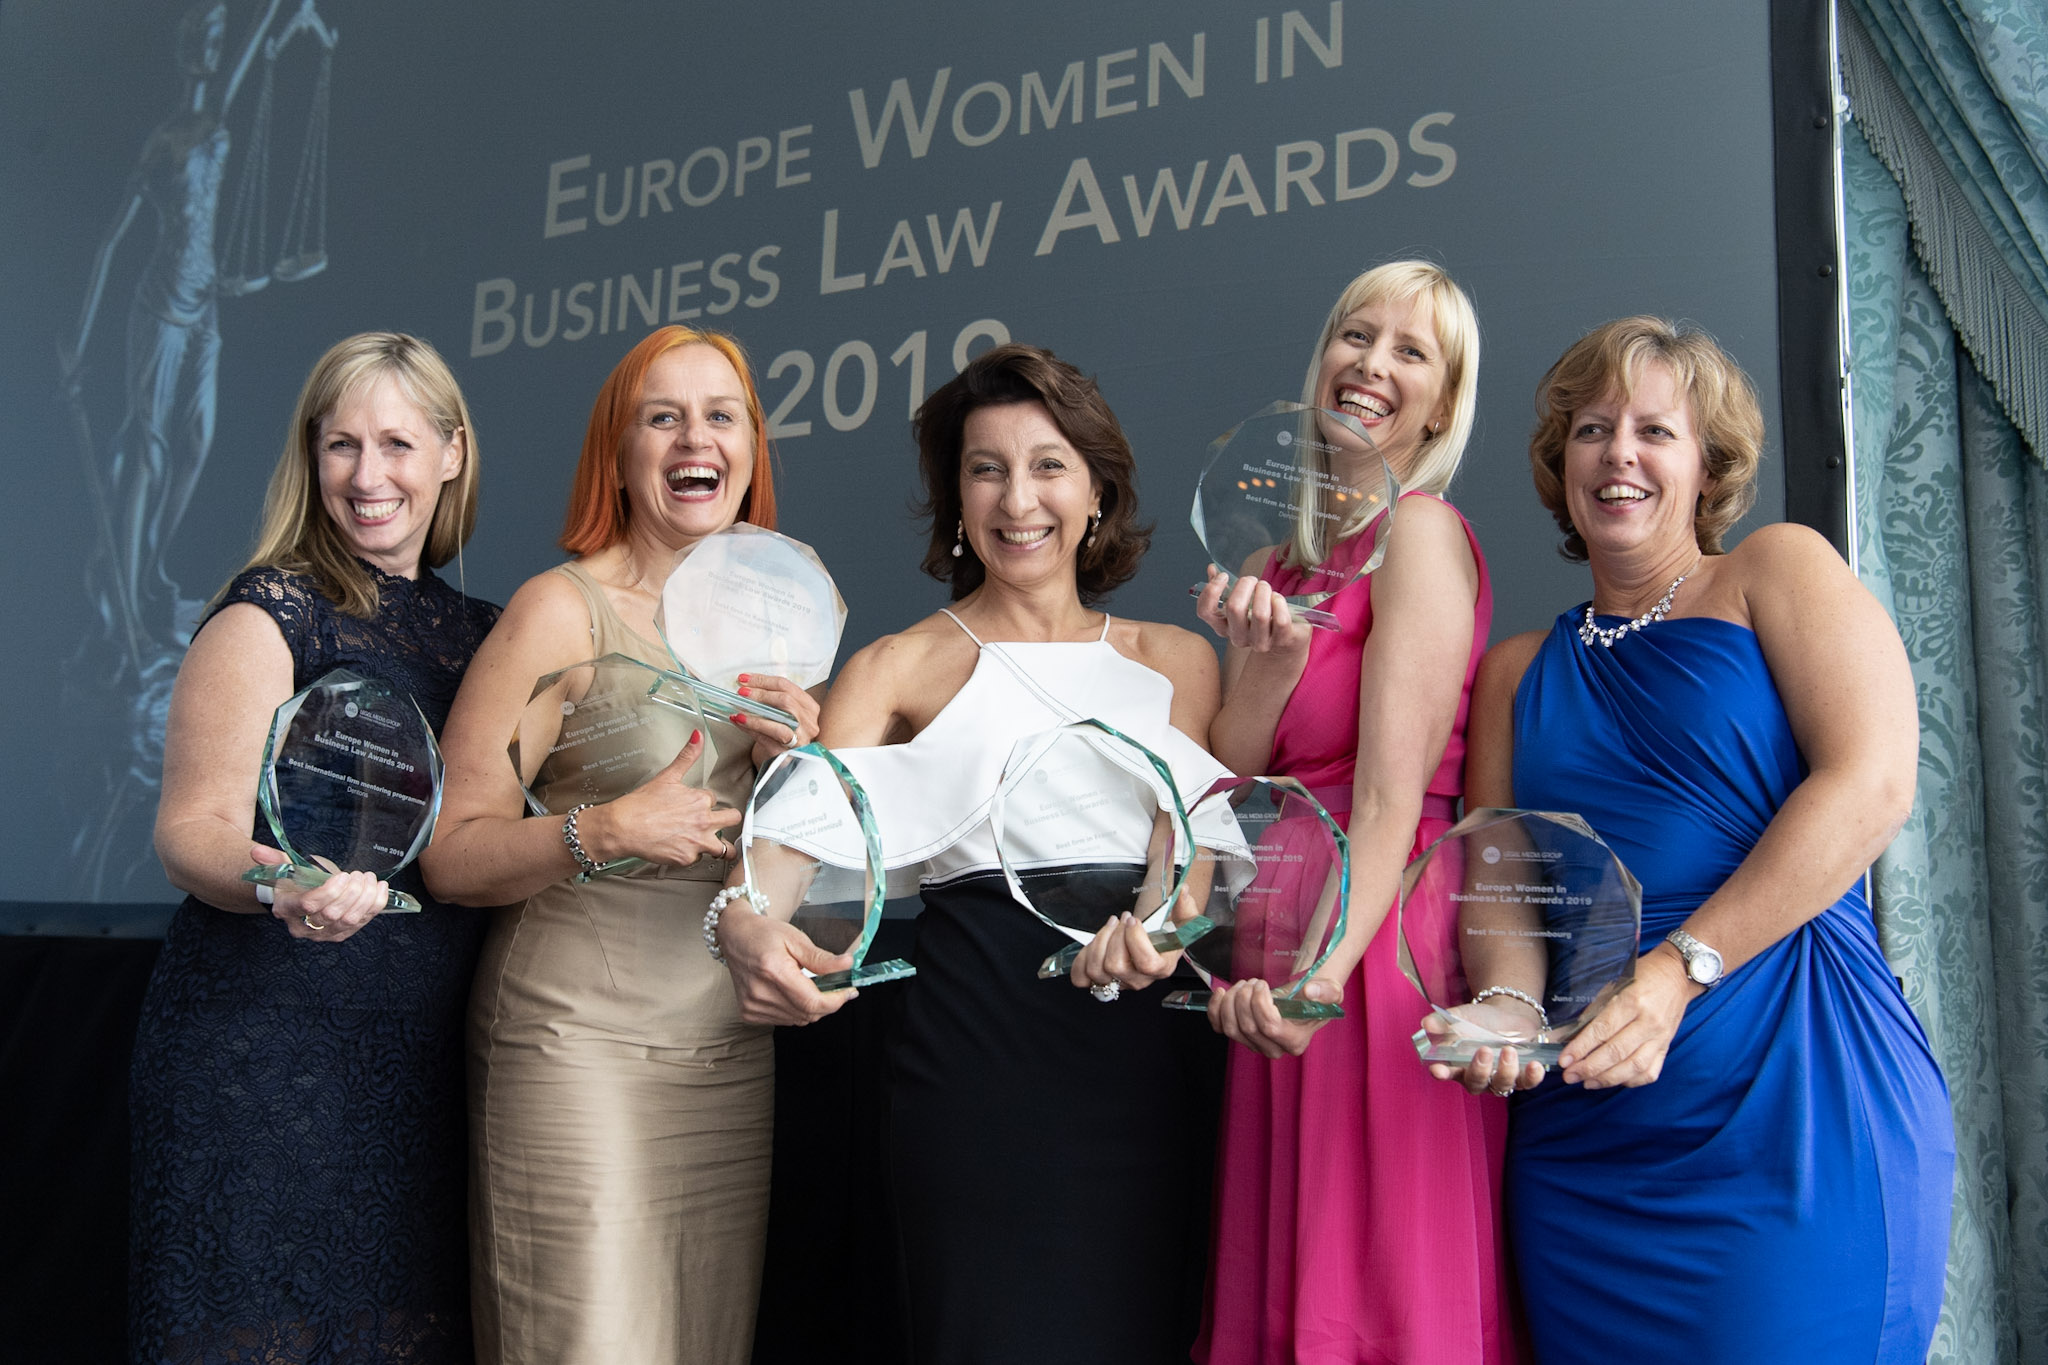 Women in Business Law Awards